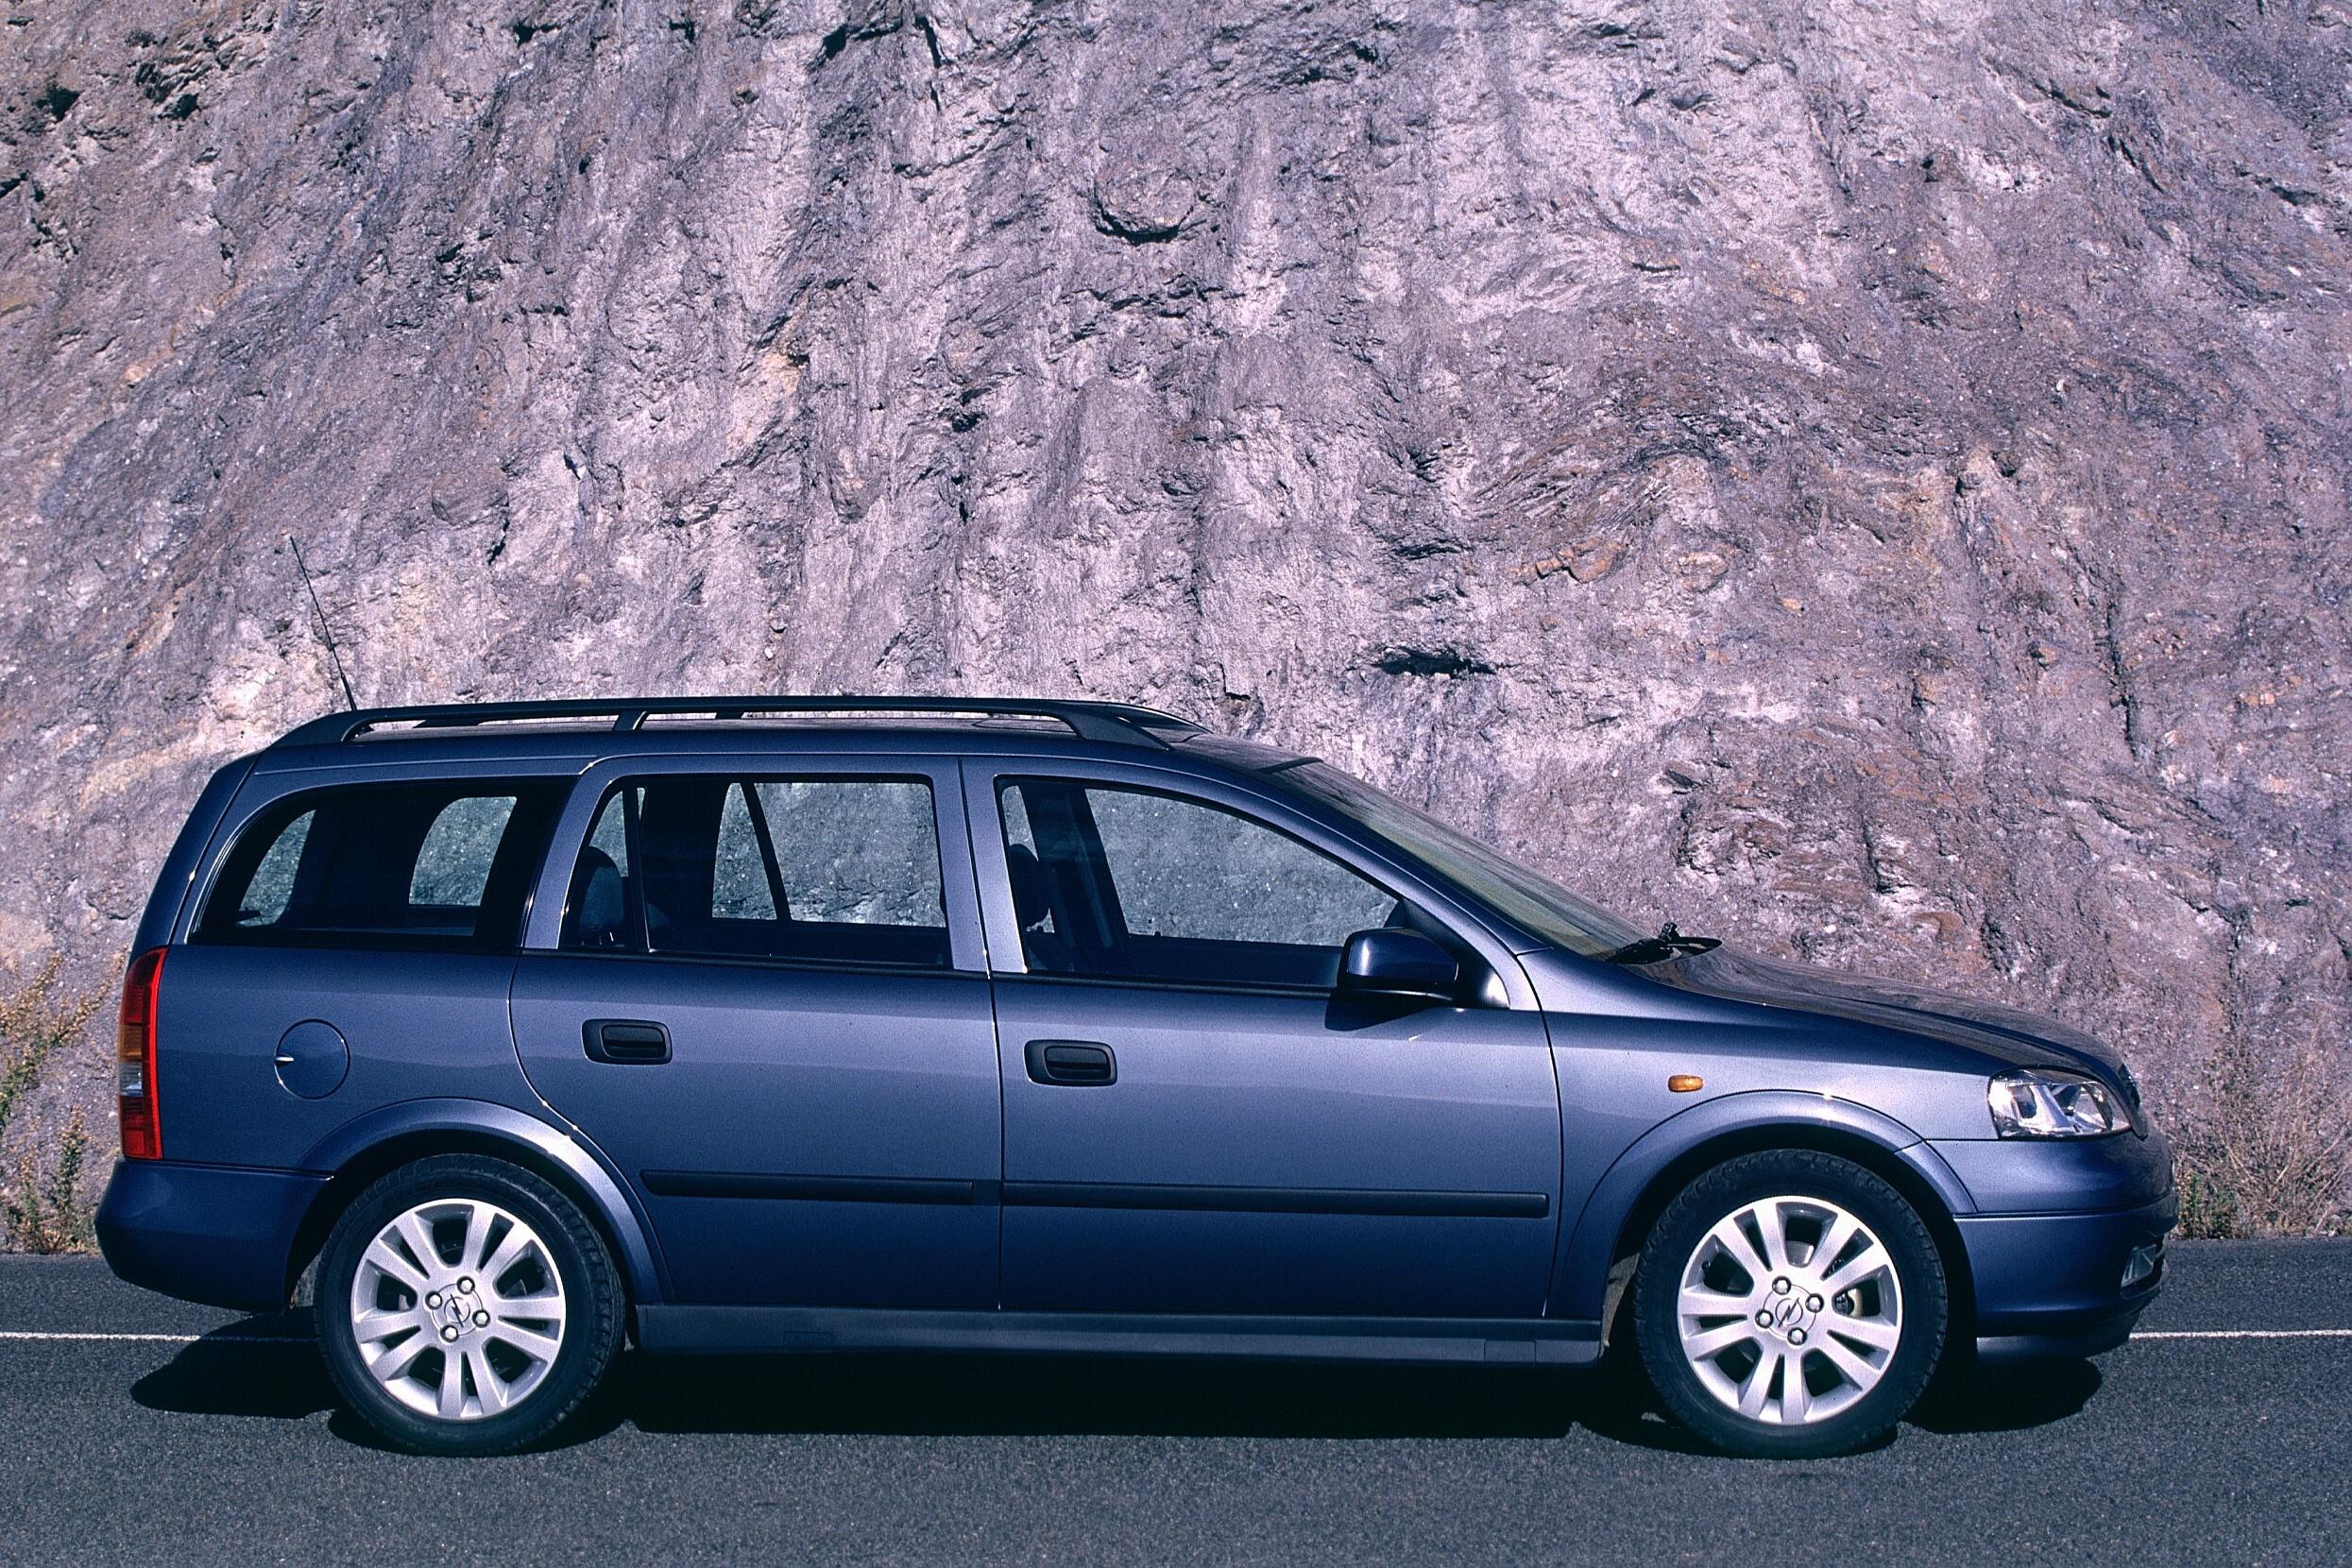 Джи караван. Opel Astra g Caravan 2006. Opel Astra g 2004 универсал. Opel Astra g Caravan 2004.